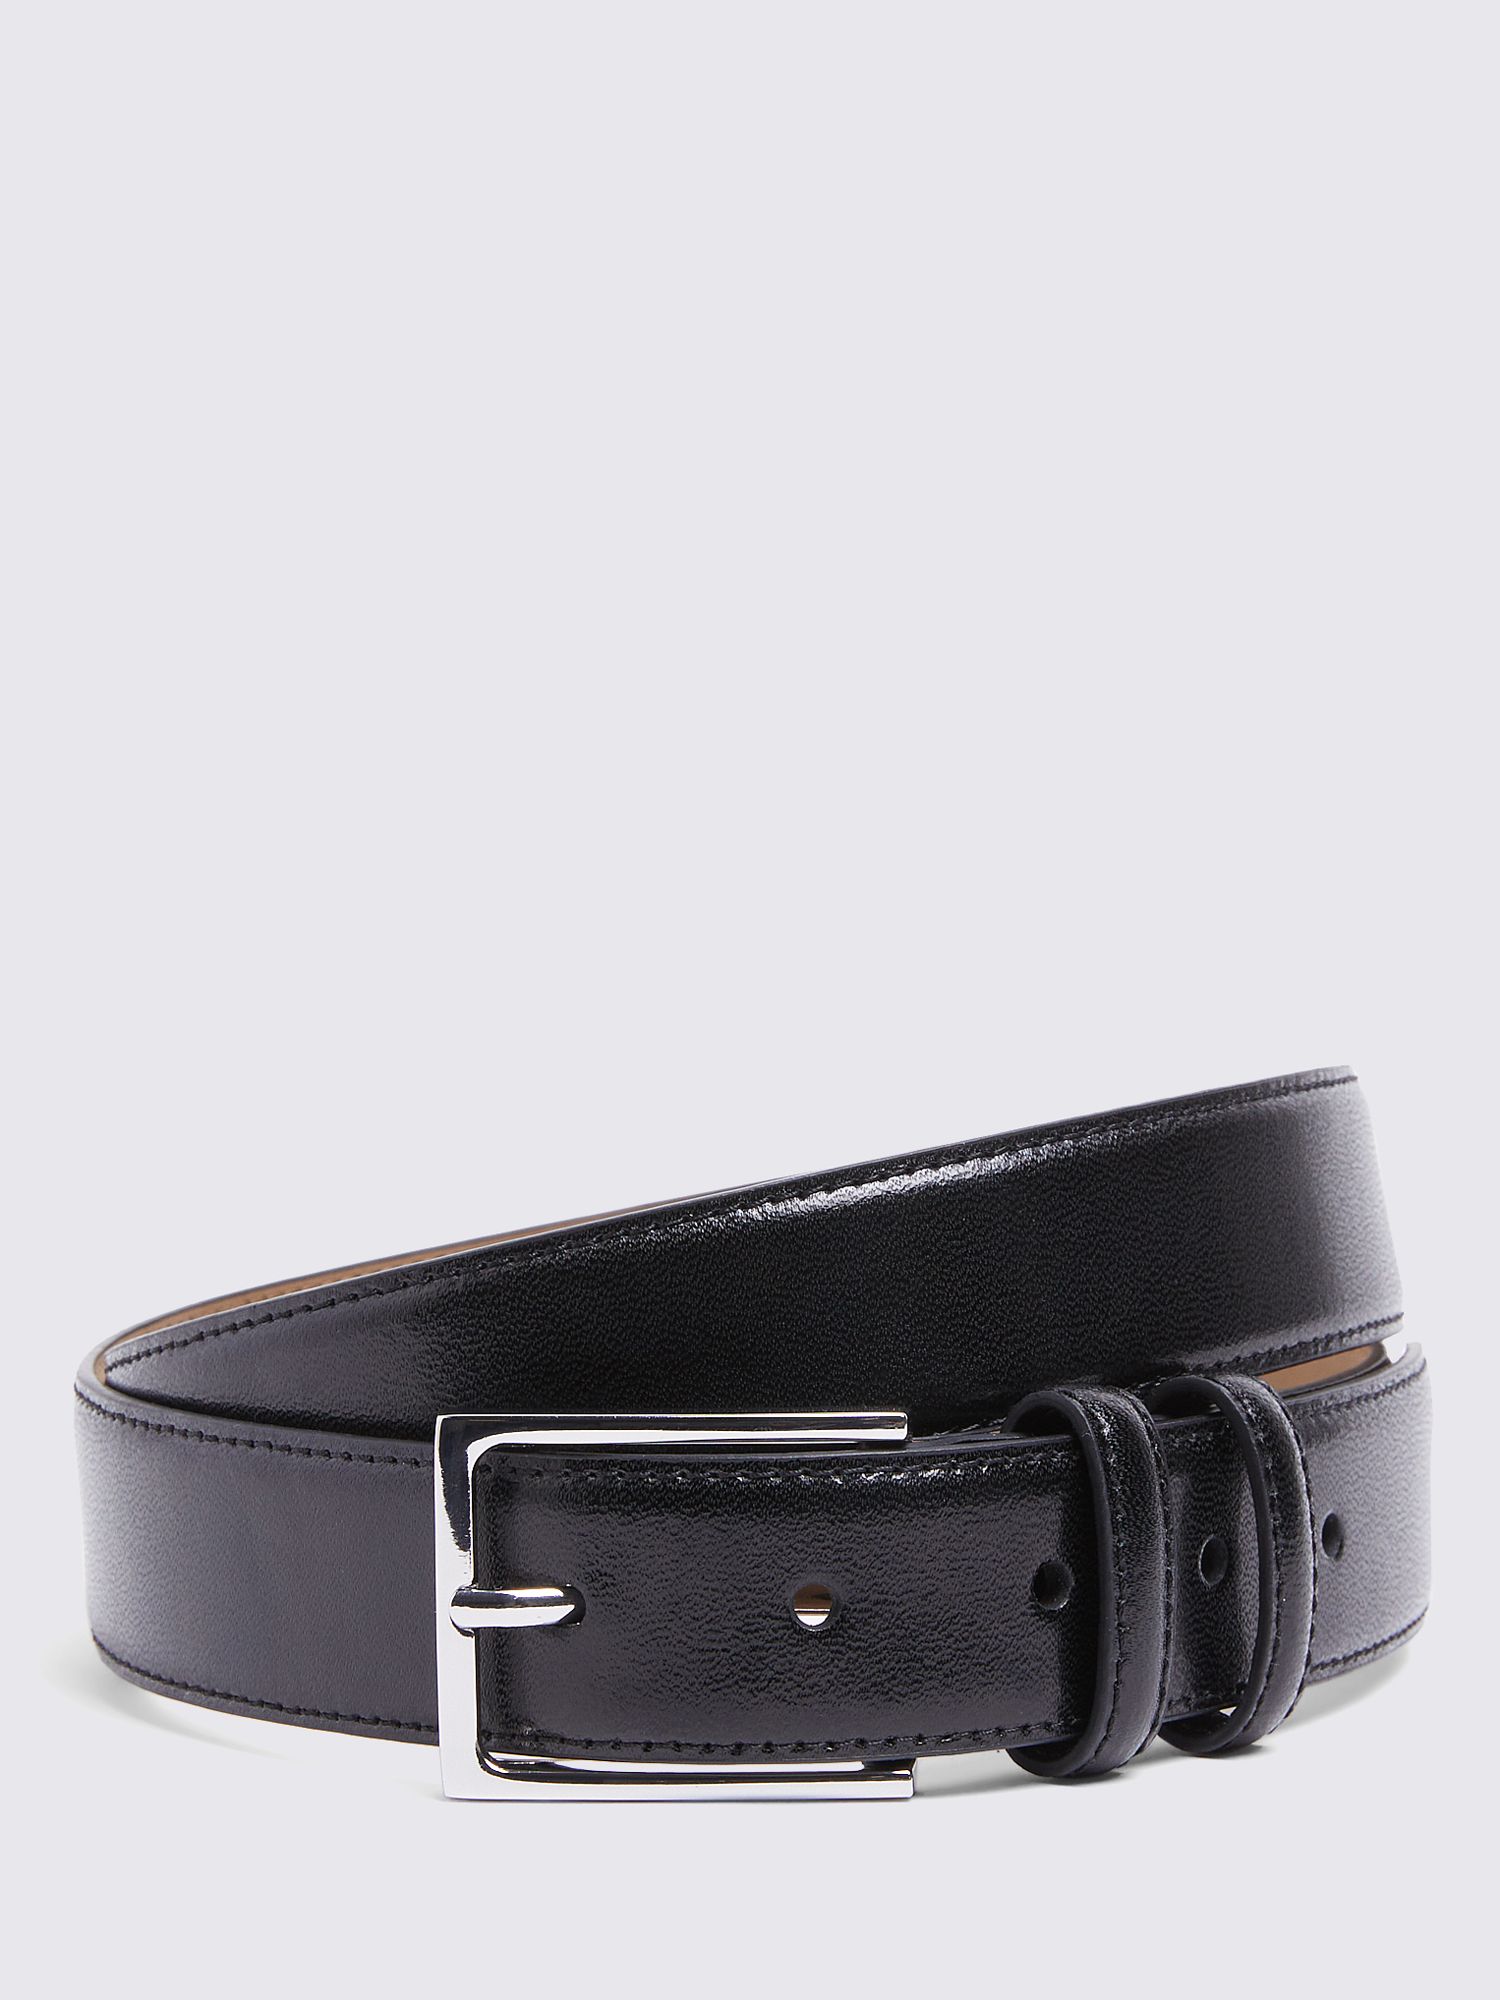 Moss Leather Belt, Black, 40R